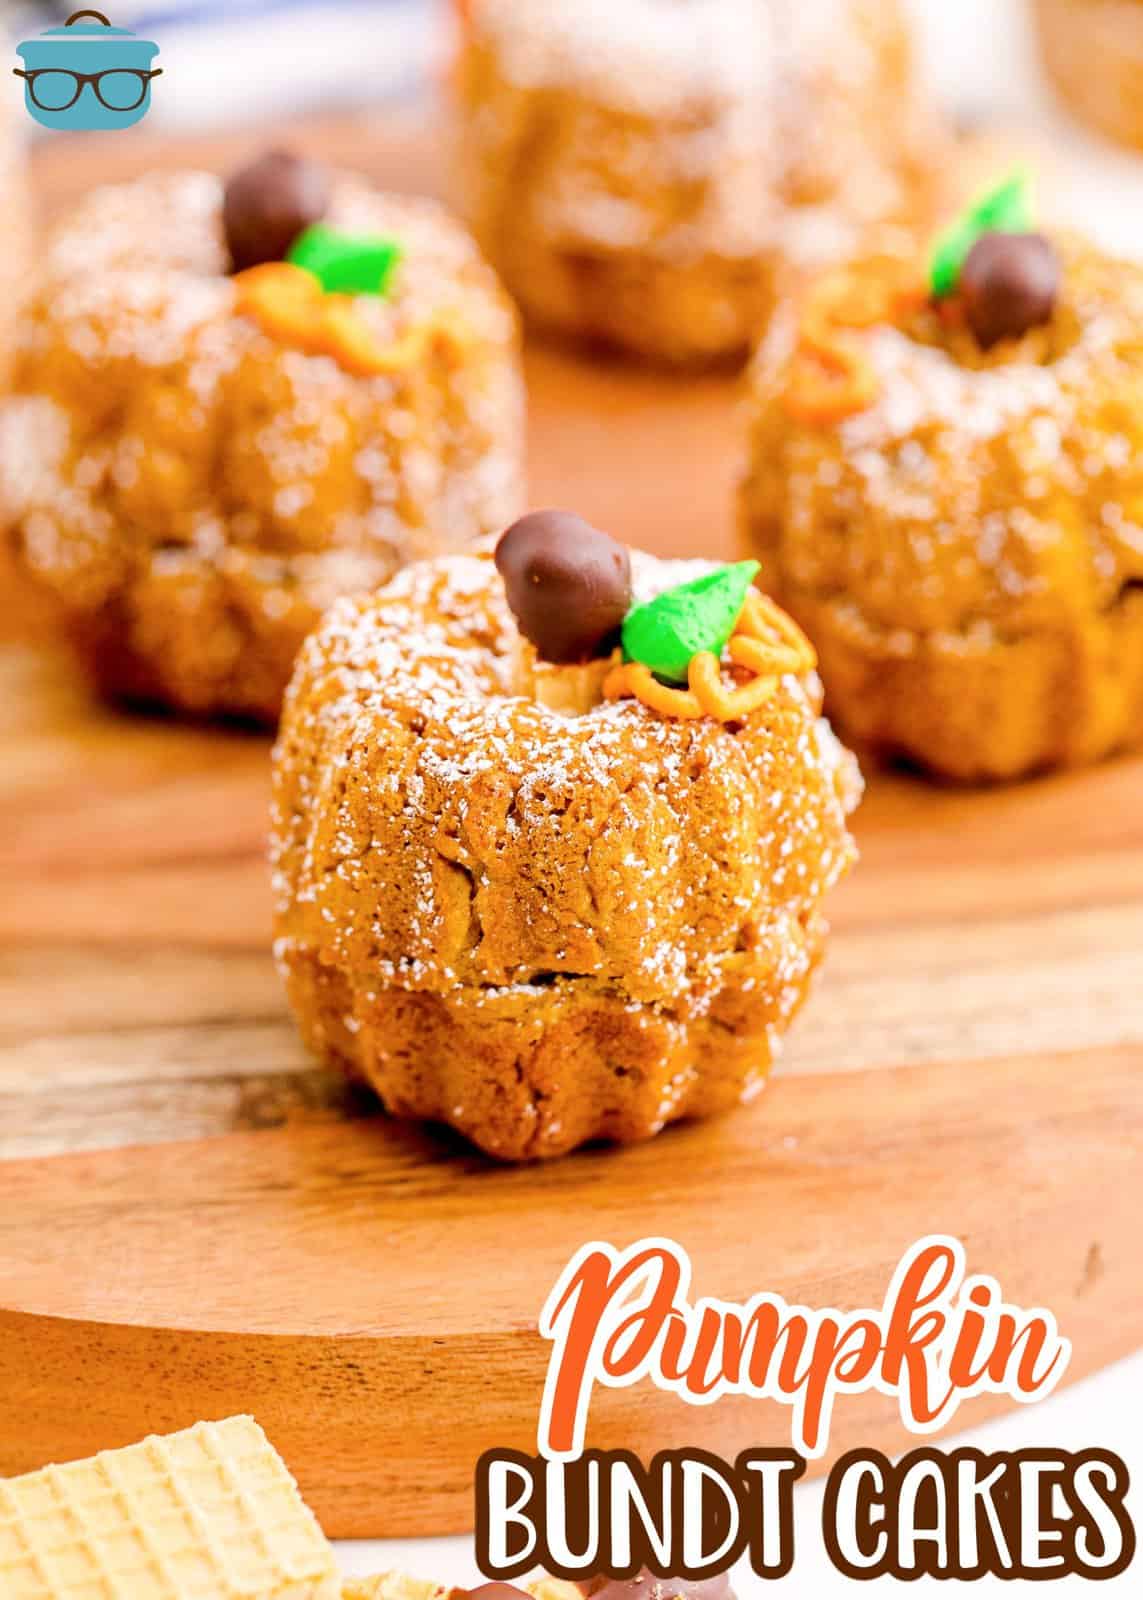 Pinterest image of Mini Pumpkin Bundt Cakes on wooden platter showing decorations.